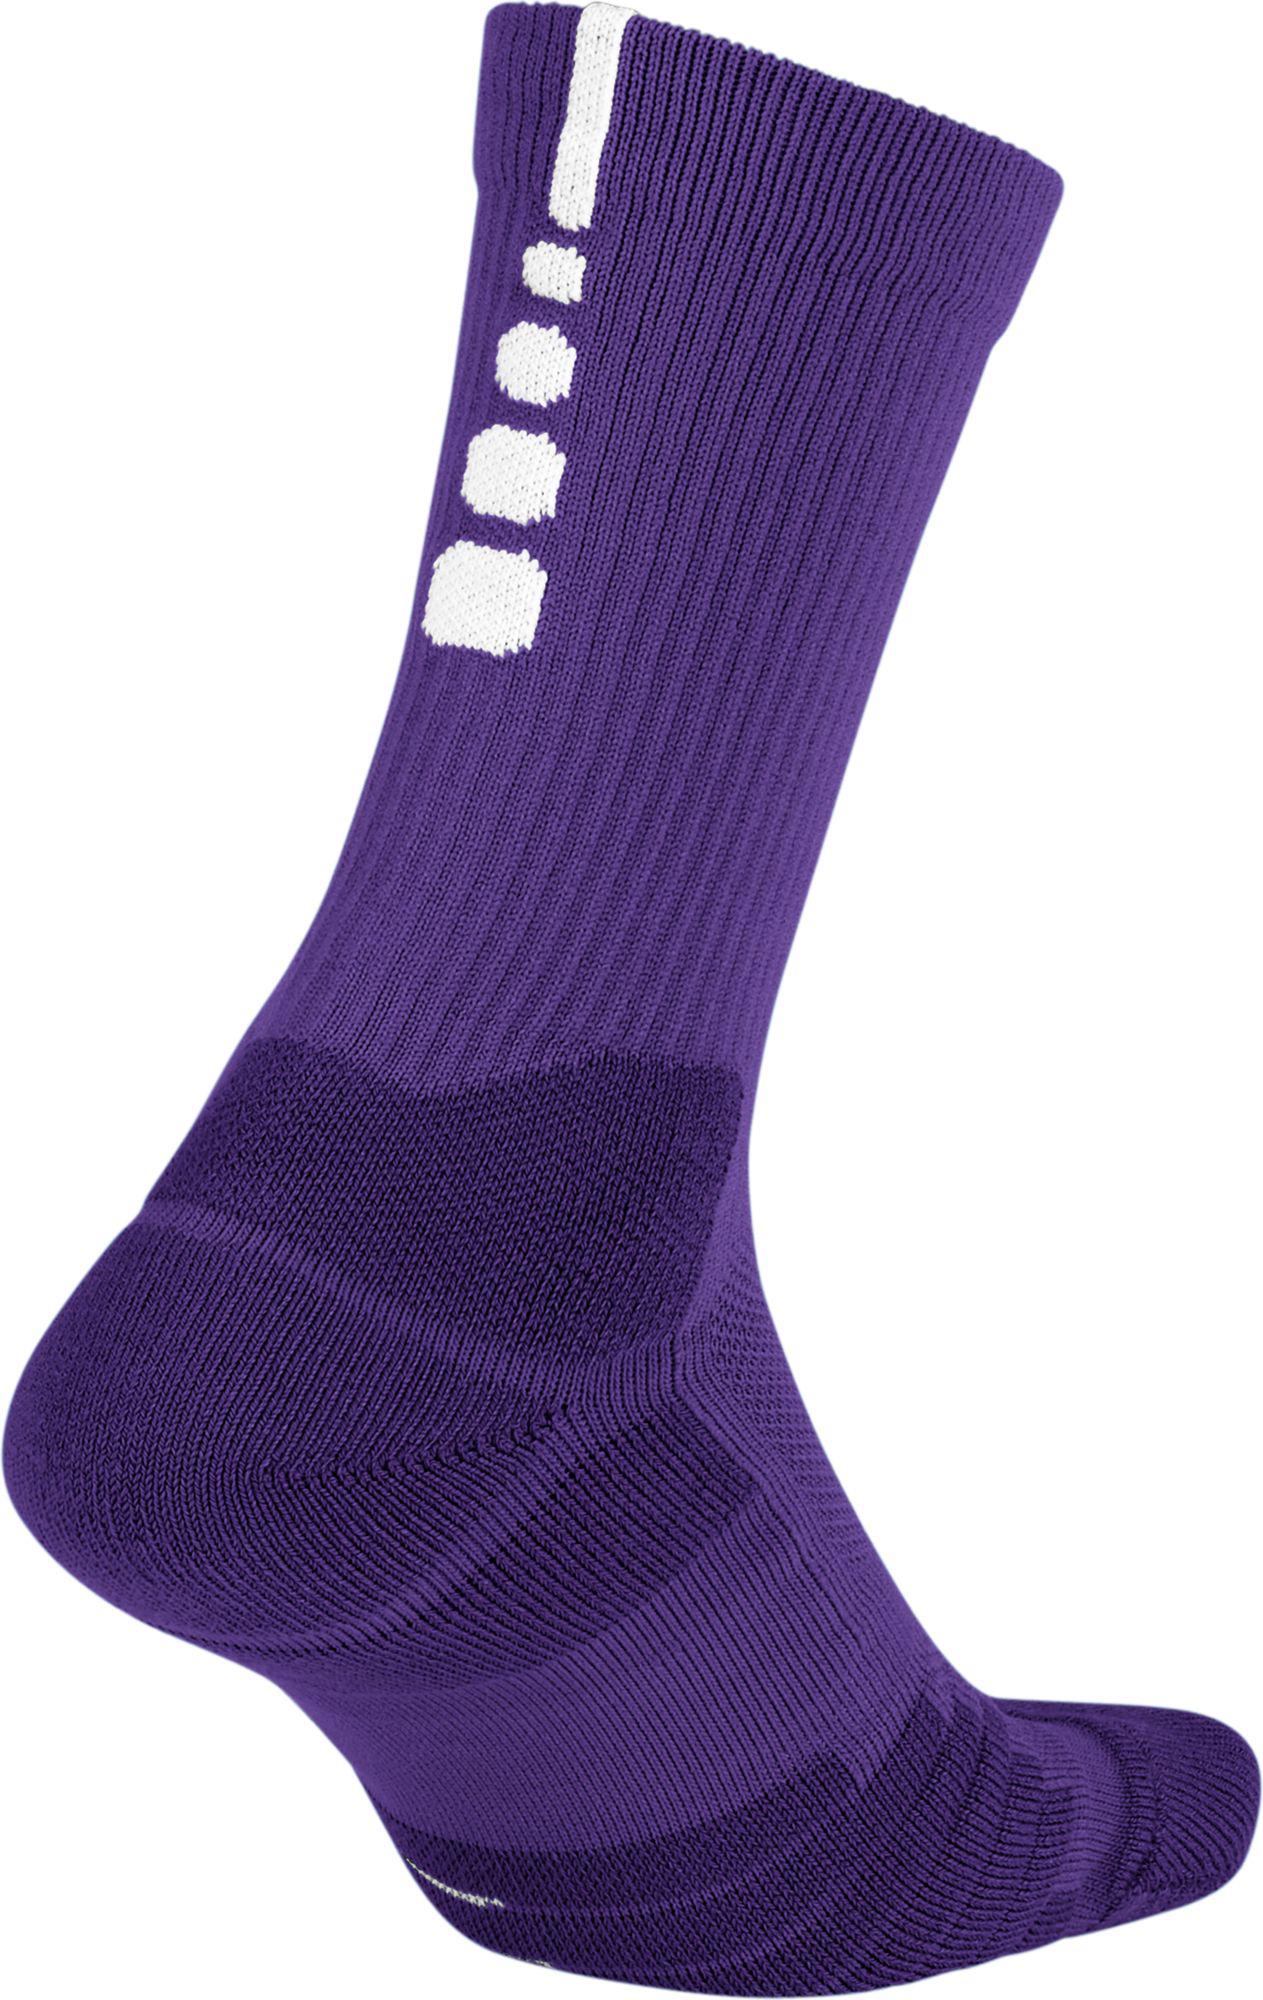 Nike Synthetic Elite Quick Nba Basketball Crew Socks in Purple/White ...